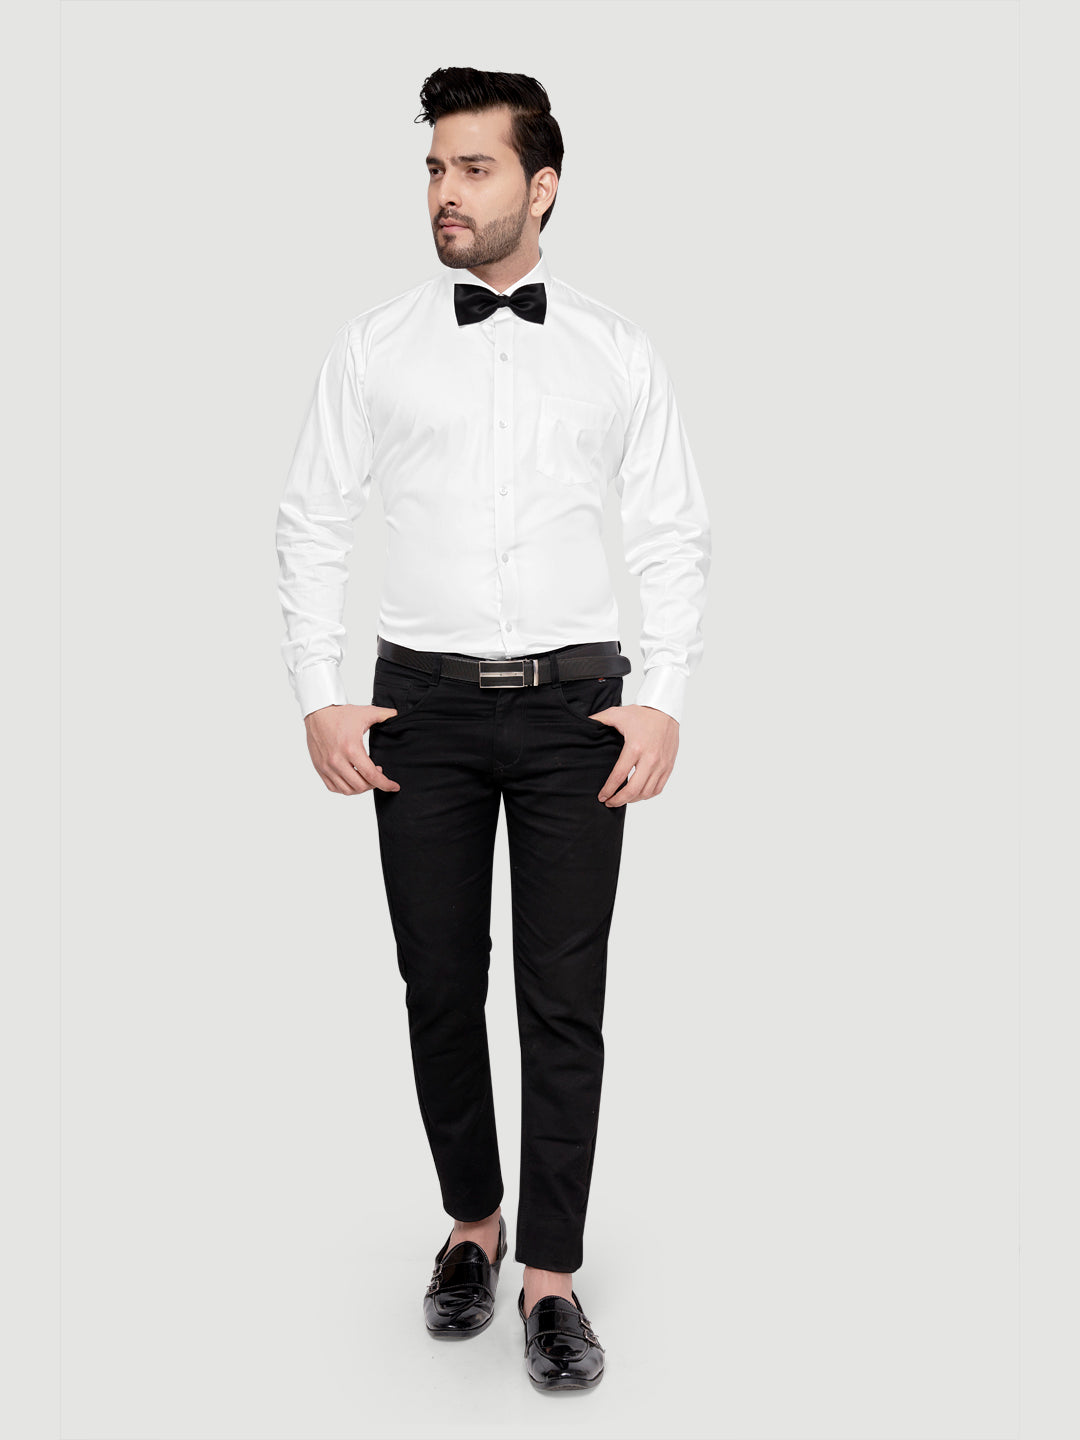 Black and White Shirts Men's Formal Cufflink Shirt White w bow